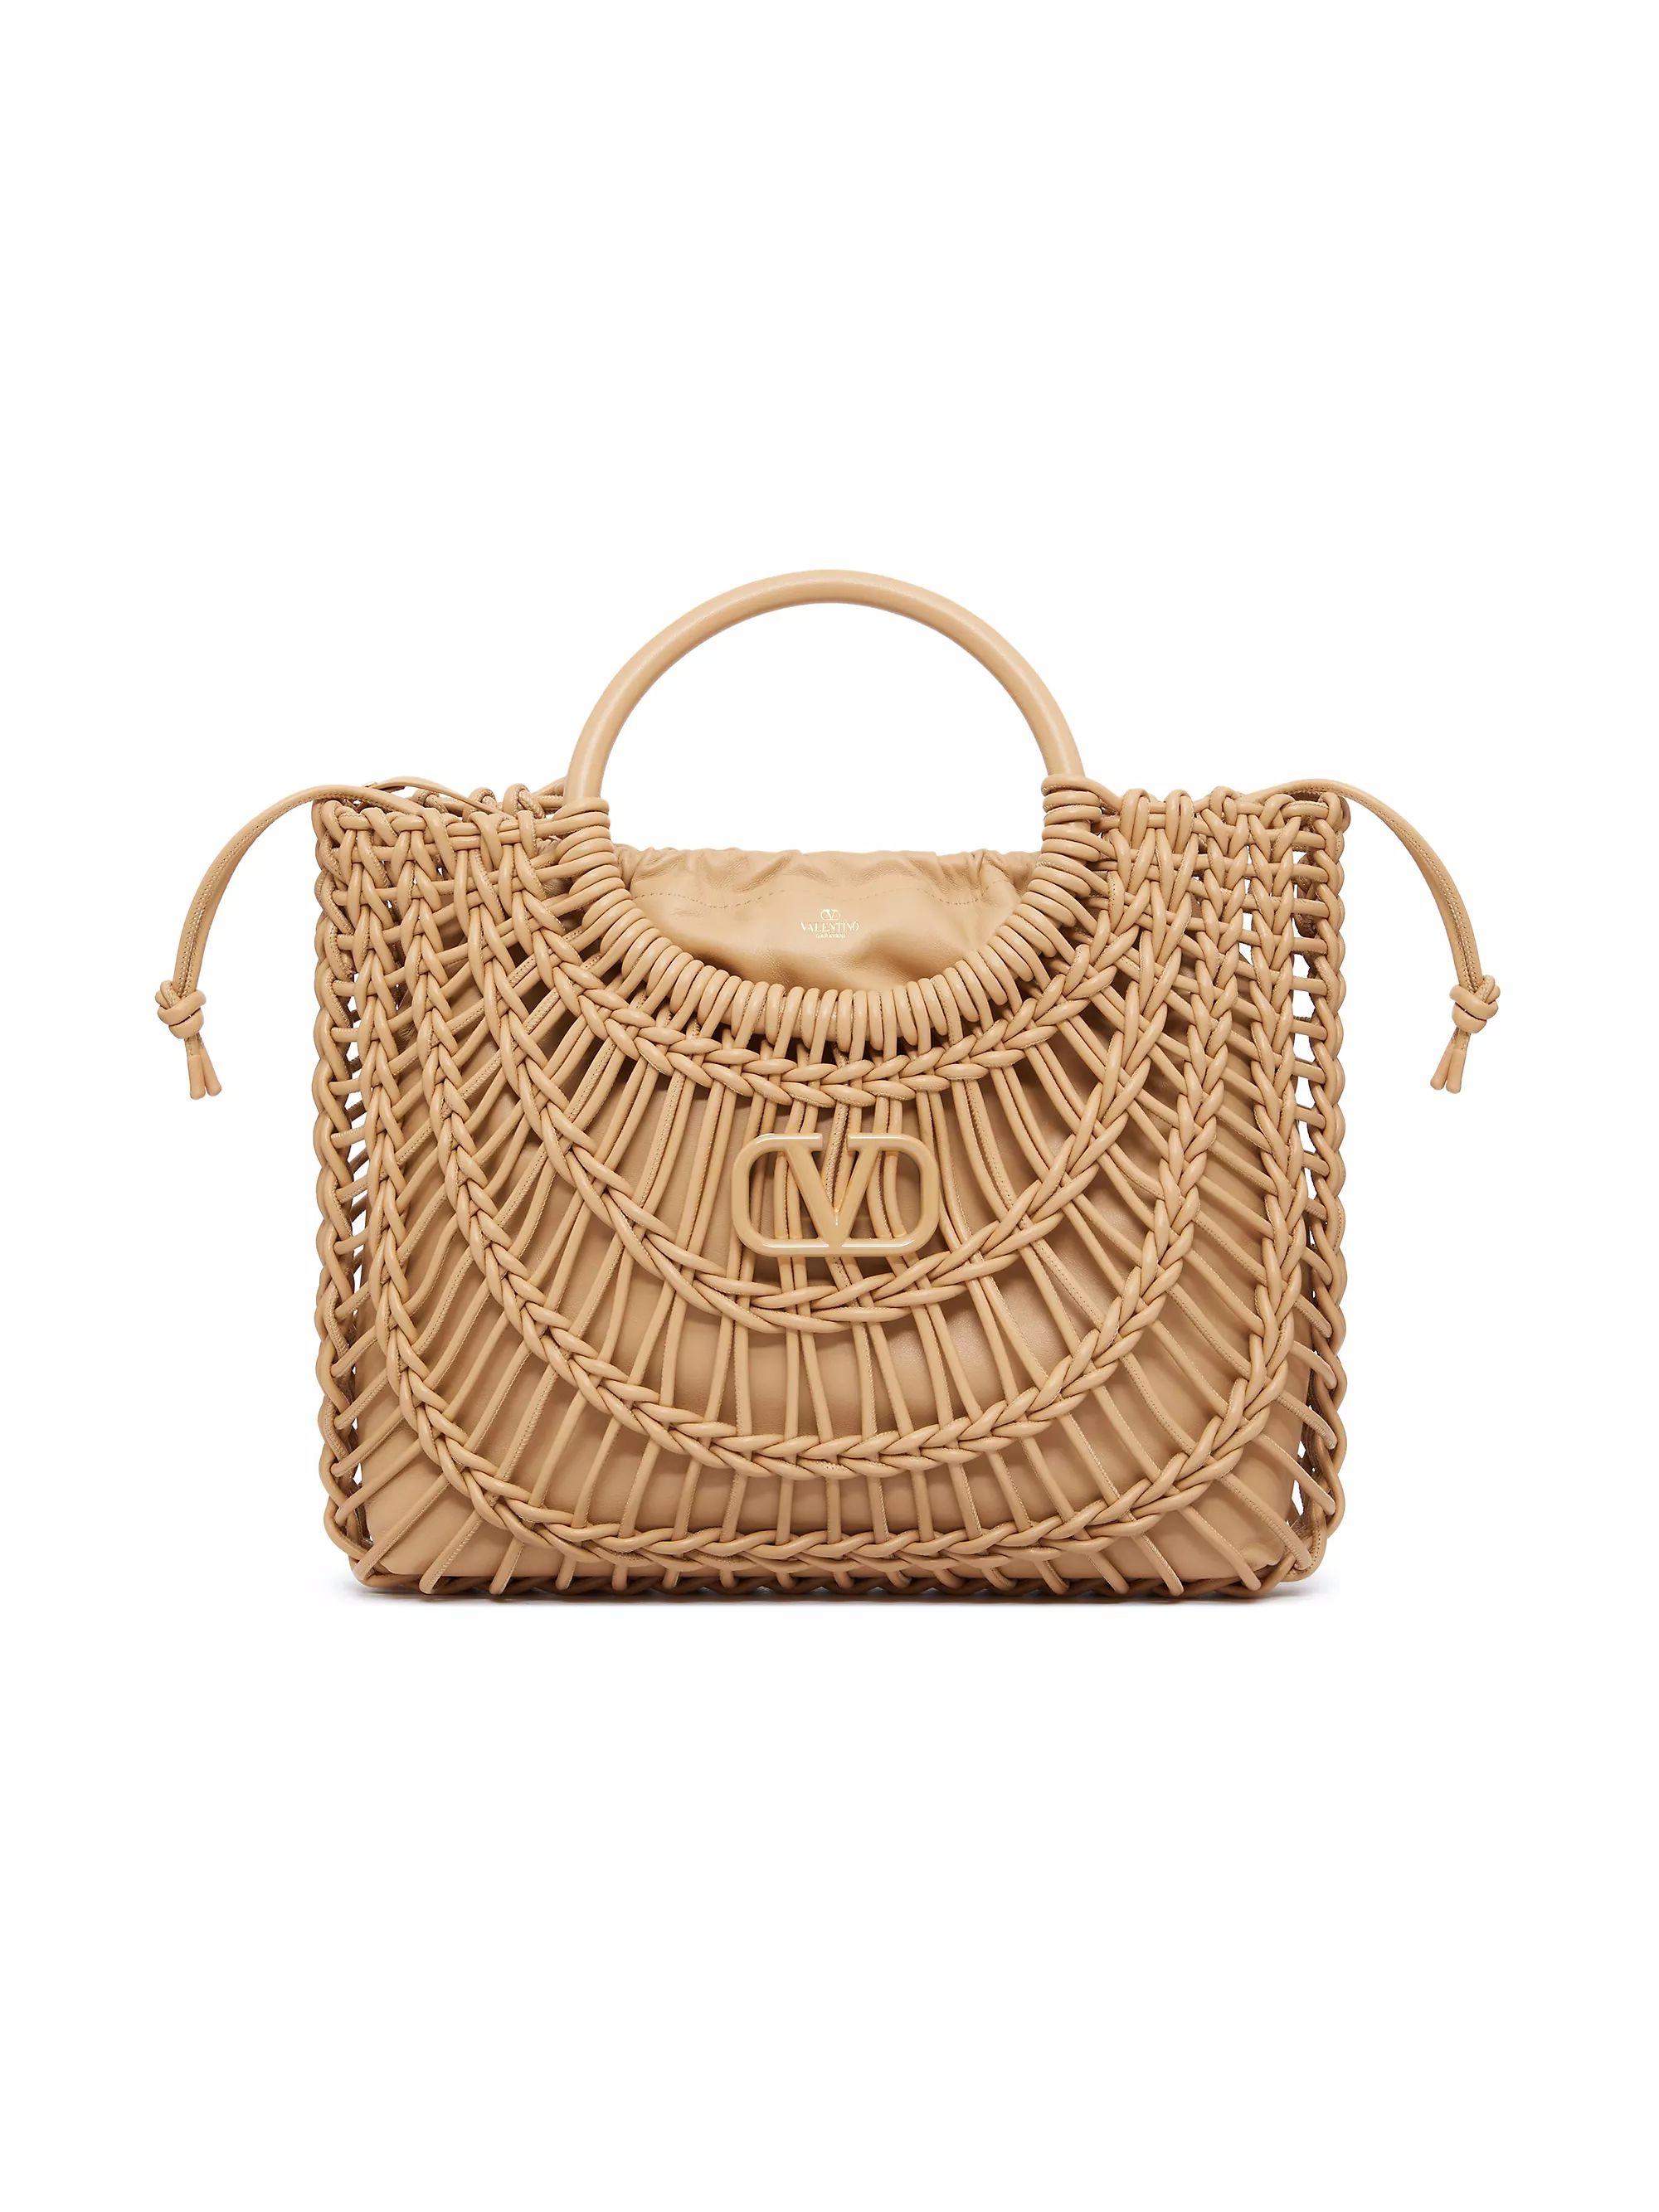 Allknots Woven Leather Shopper Bag | Saks Fifth Avenue